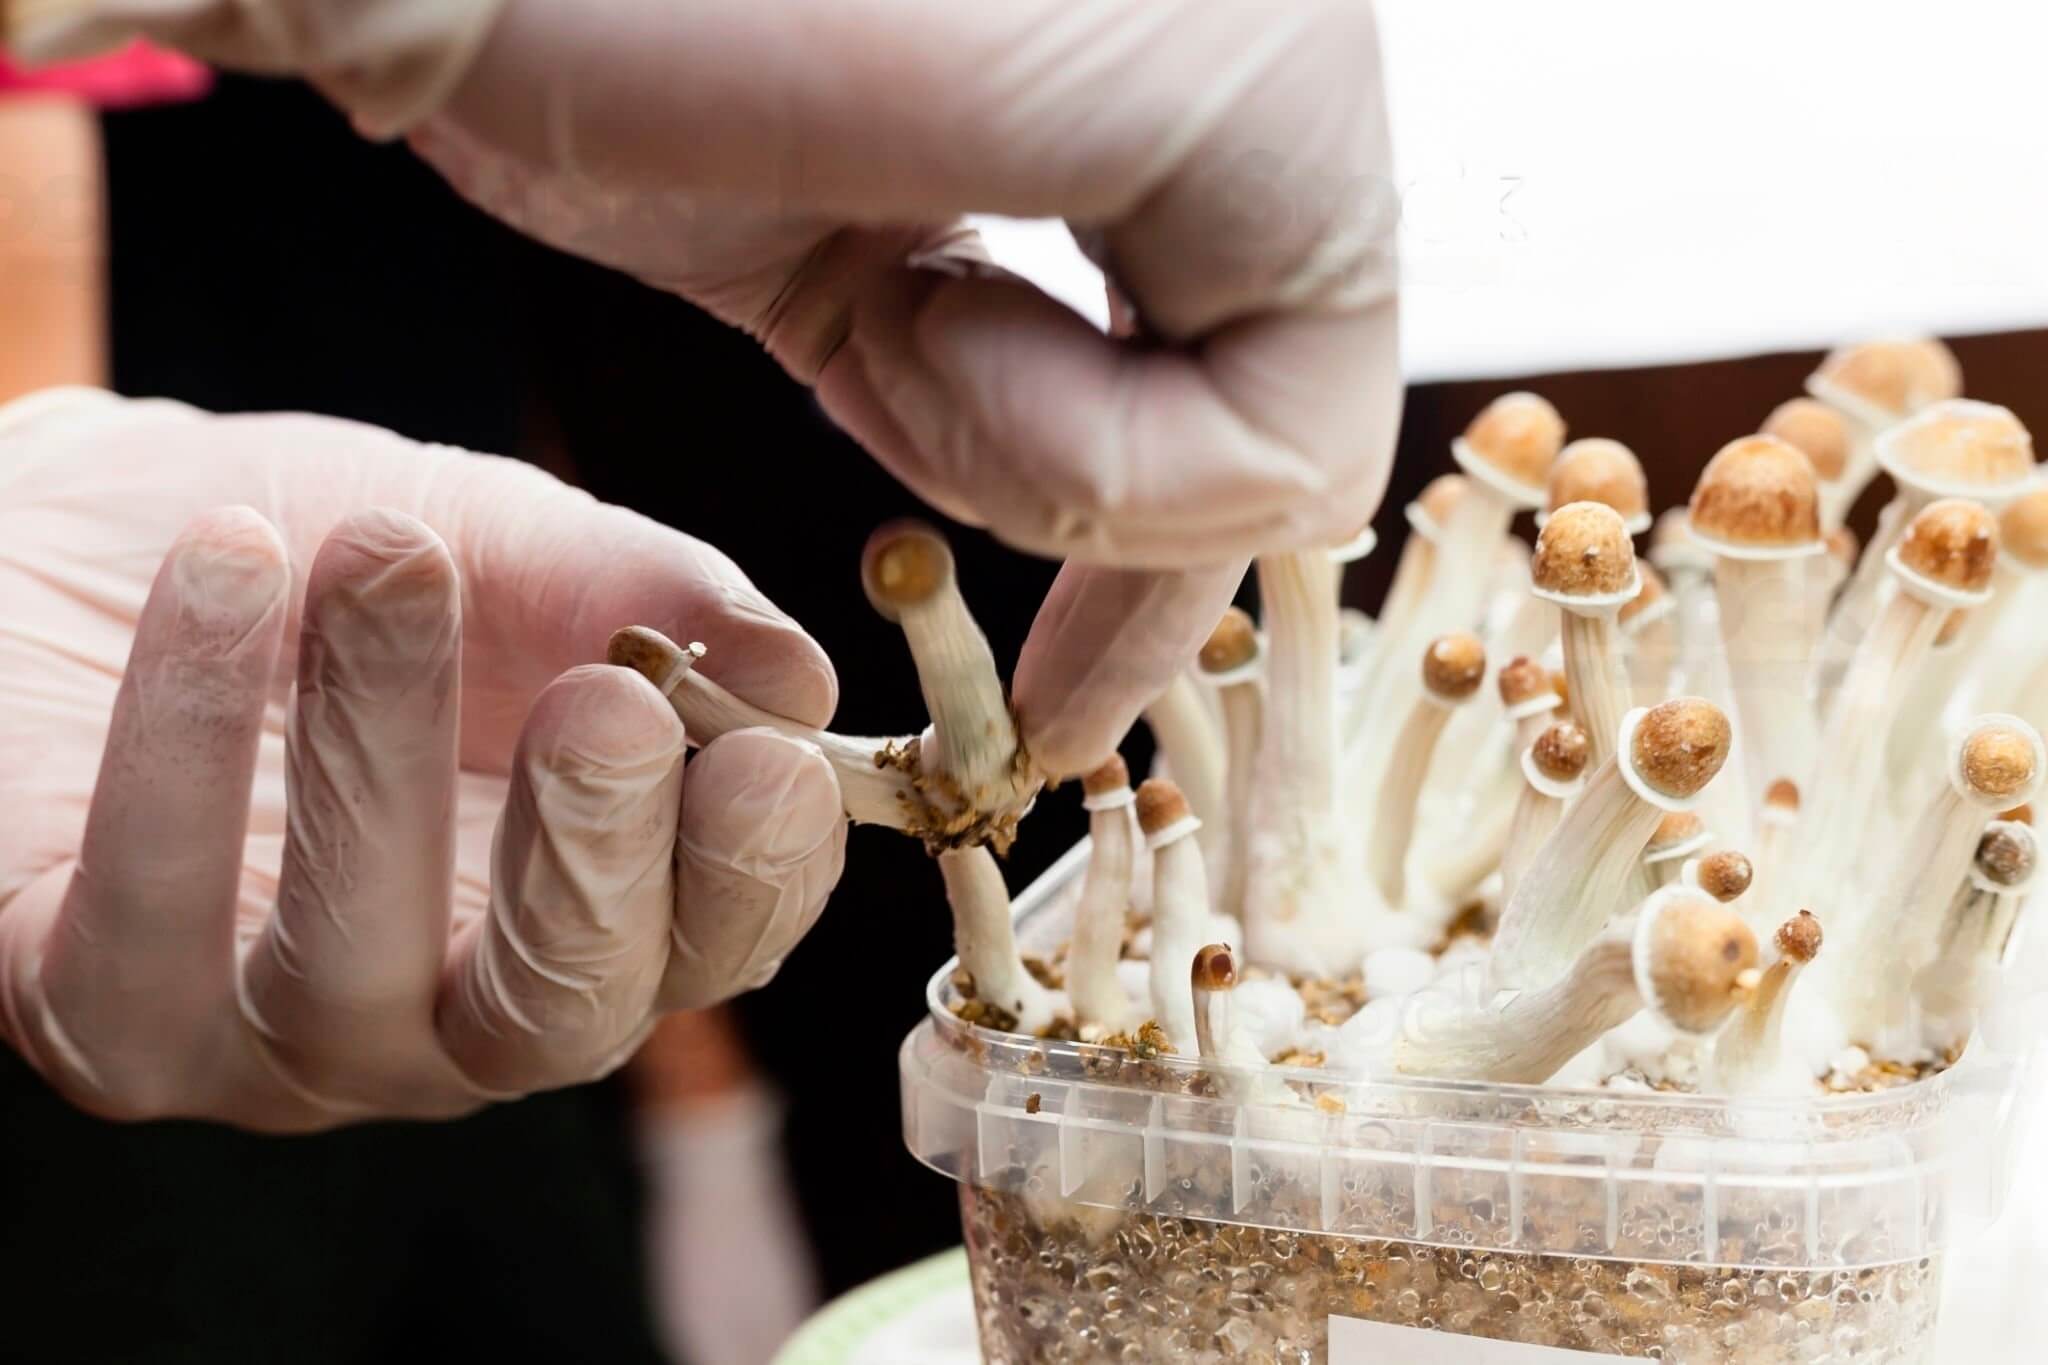 Mycelia: Fungi’s Role in Our Ecosystems